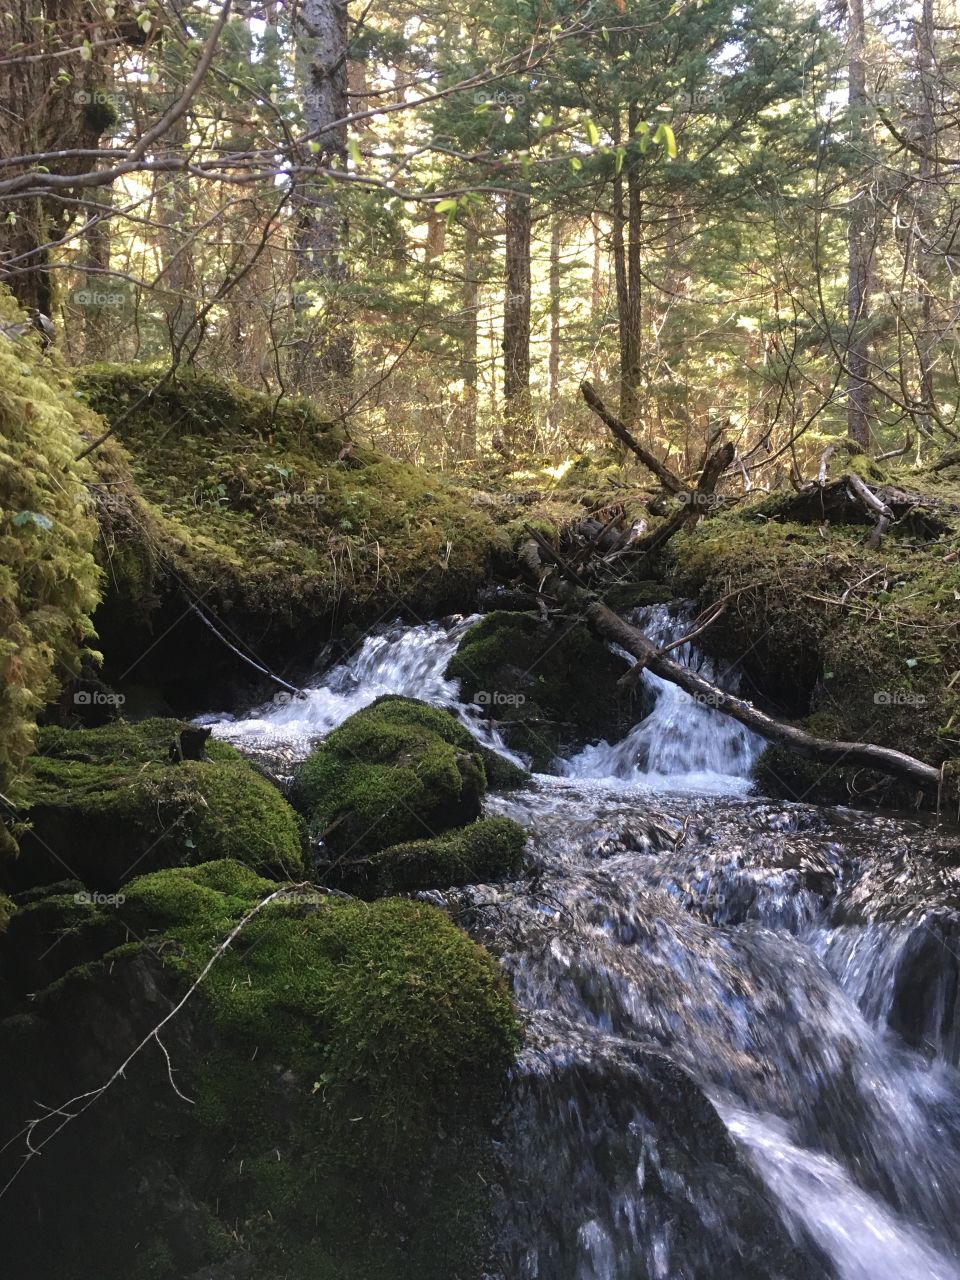 Stream in the forest near Girdwood, Alaska